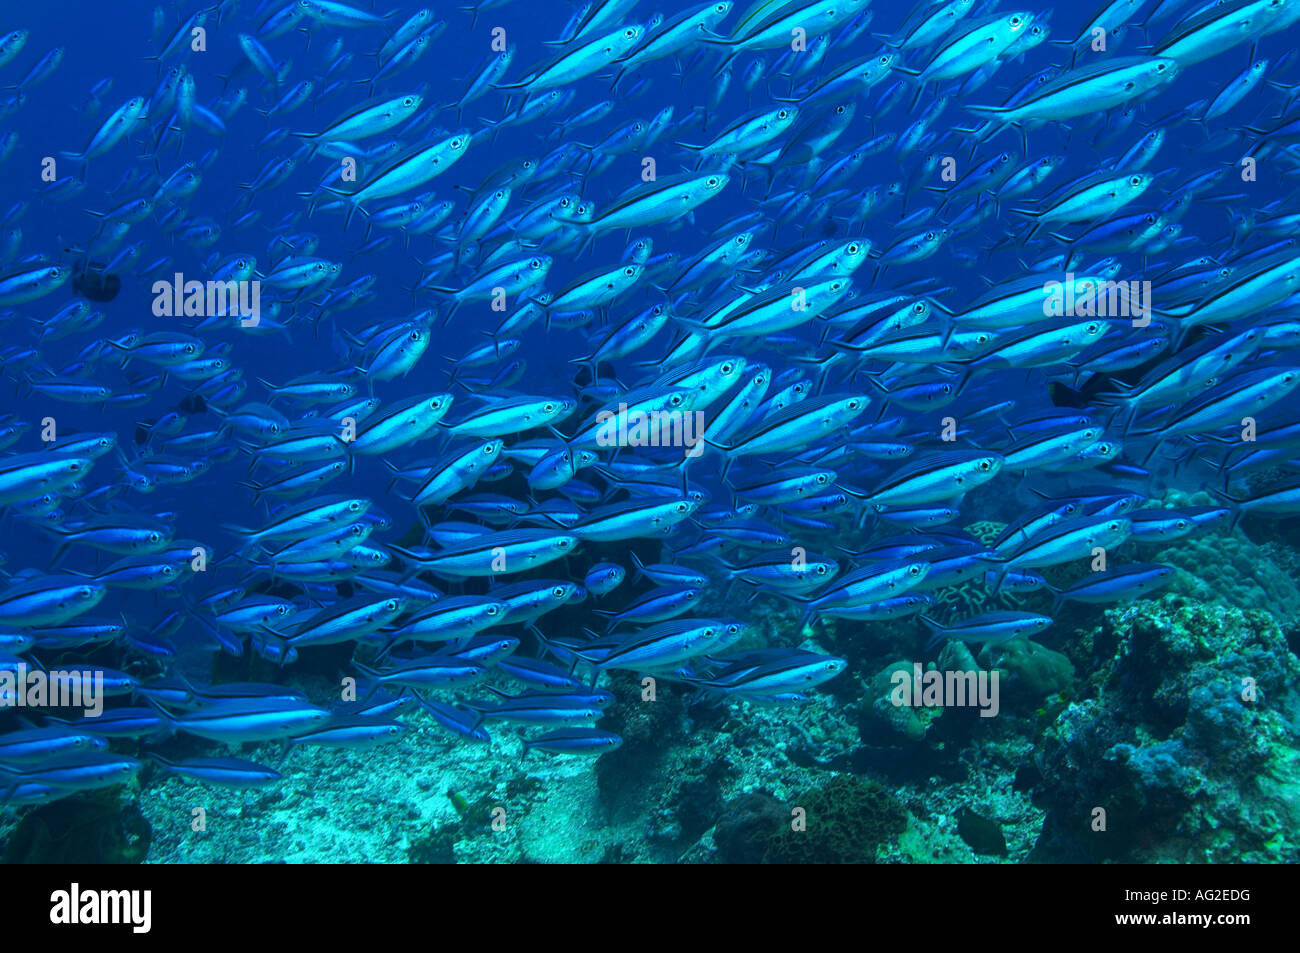 Large school of tropical fish in ocean Stock Photo